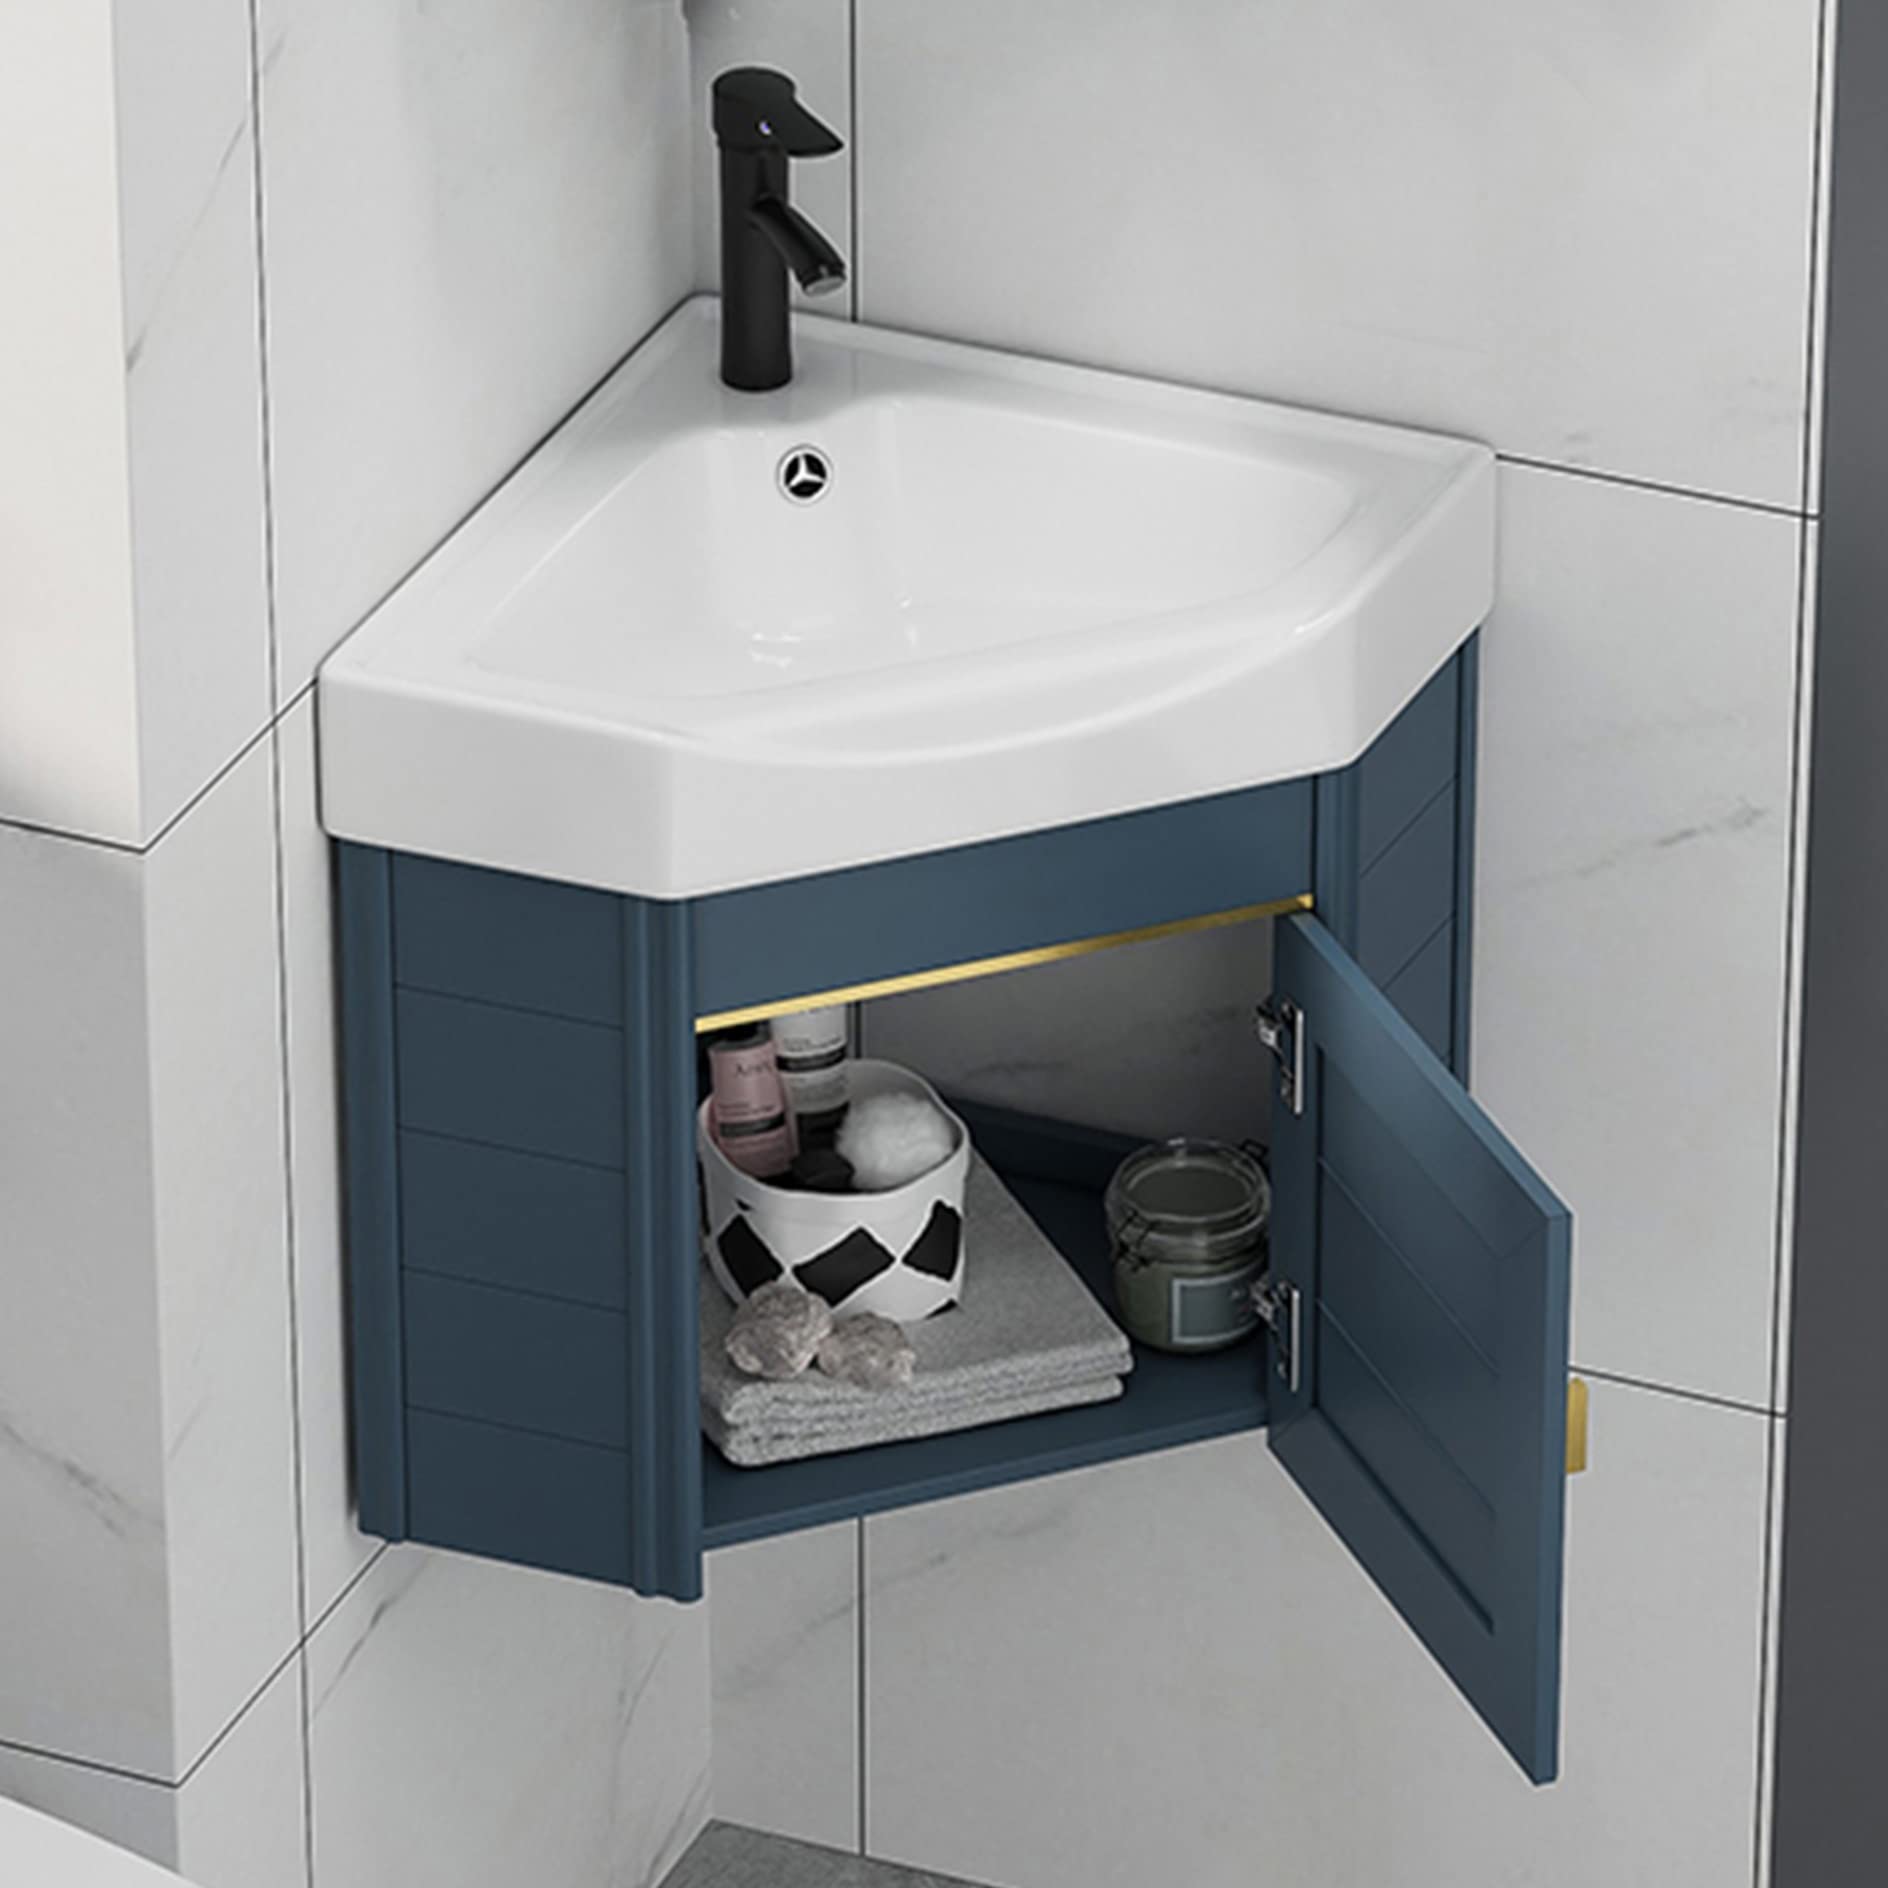 cloakroom sink with cabinet Bathroom corner cloakroom vanity sink ceramic basin cabinet storage